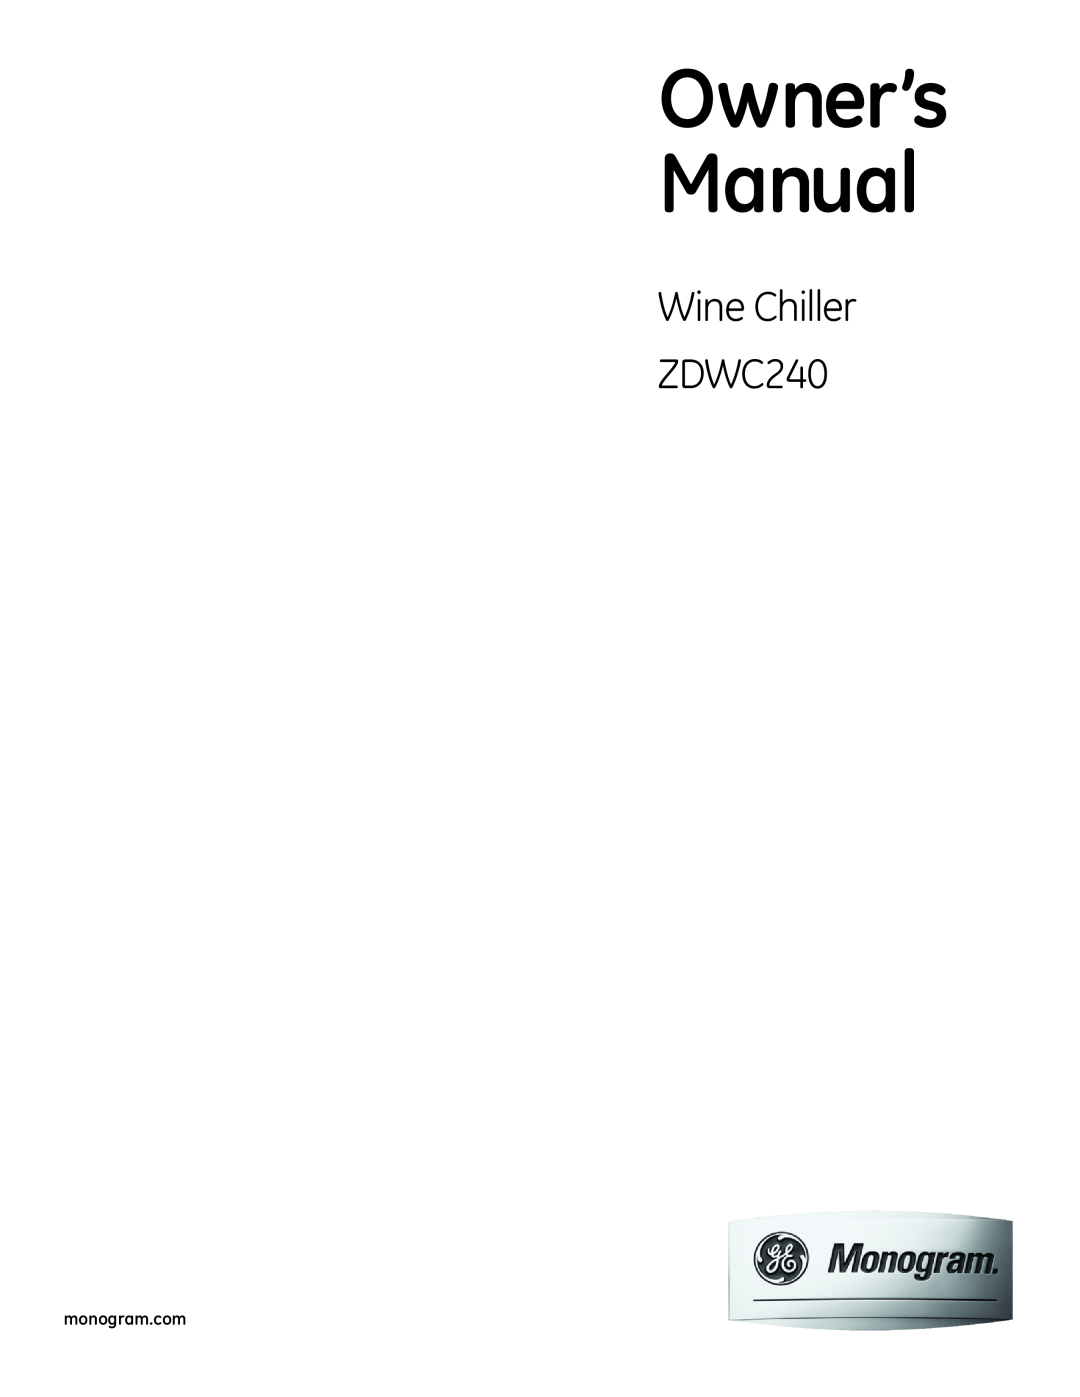 GE Monogram owner manual Wine Chiller ZDWC240 